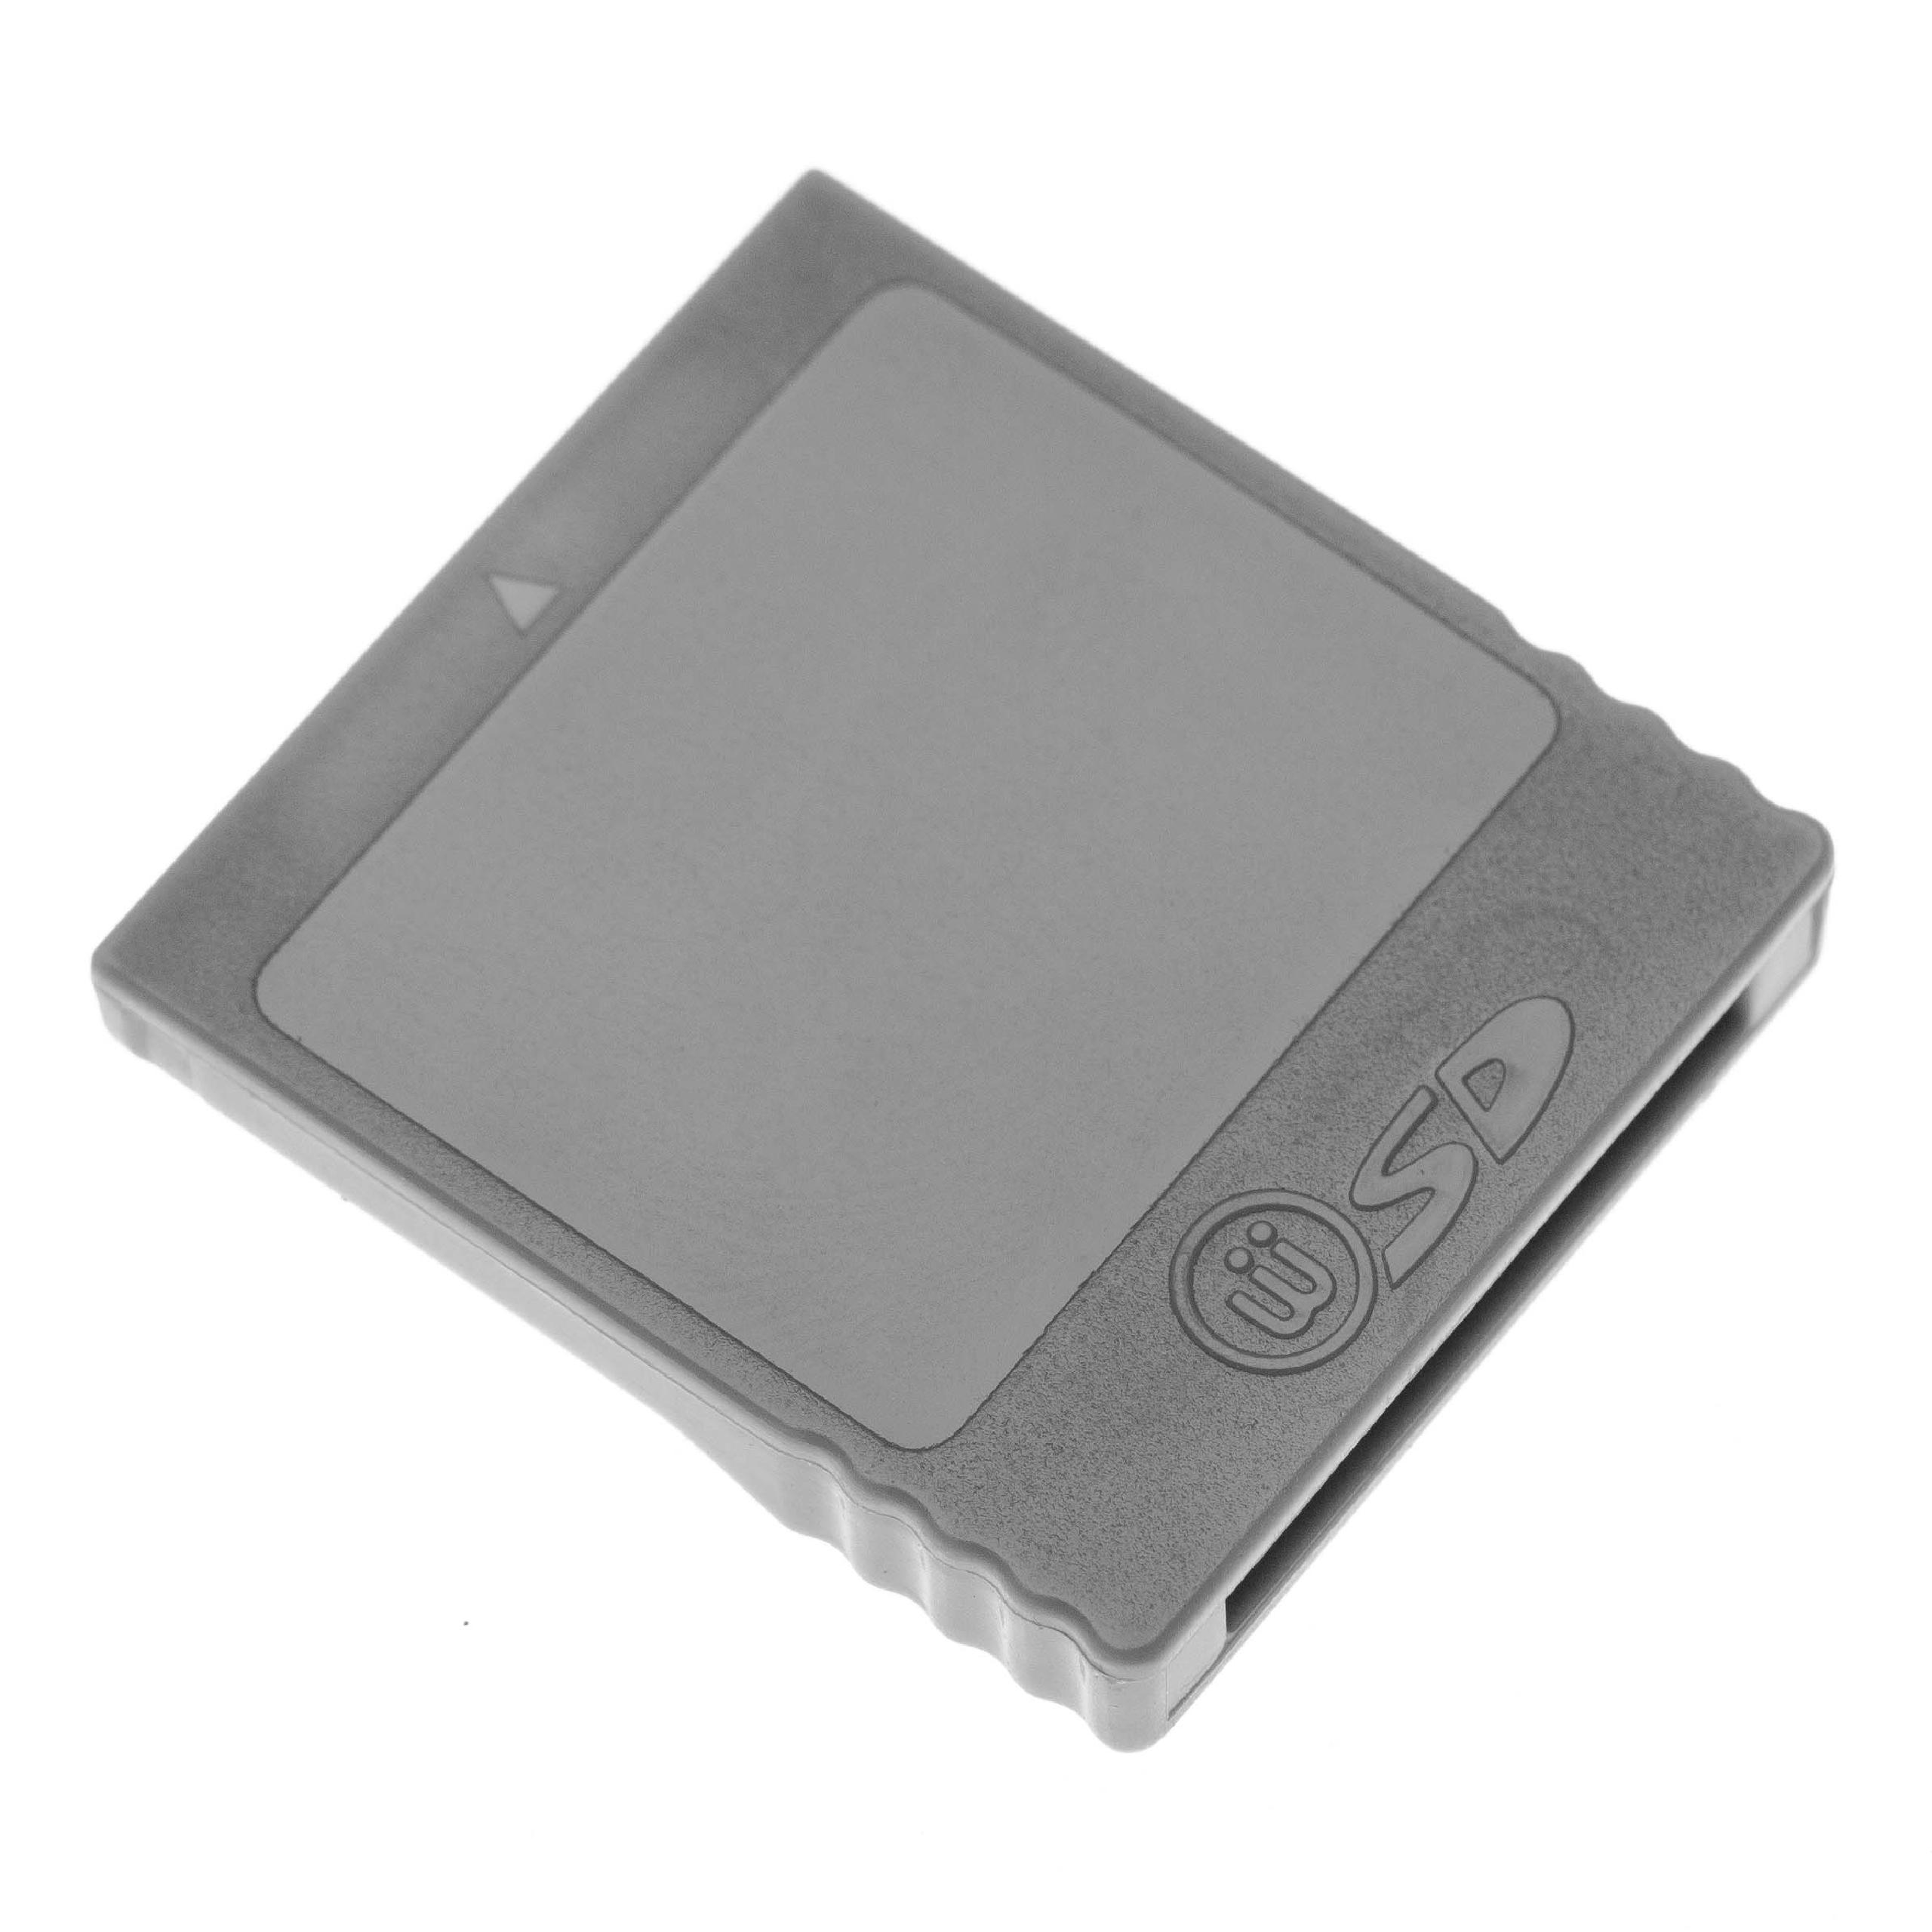 Adapter kart pamięci SD do konsoli do gier Nintendo GameCube, Wii 